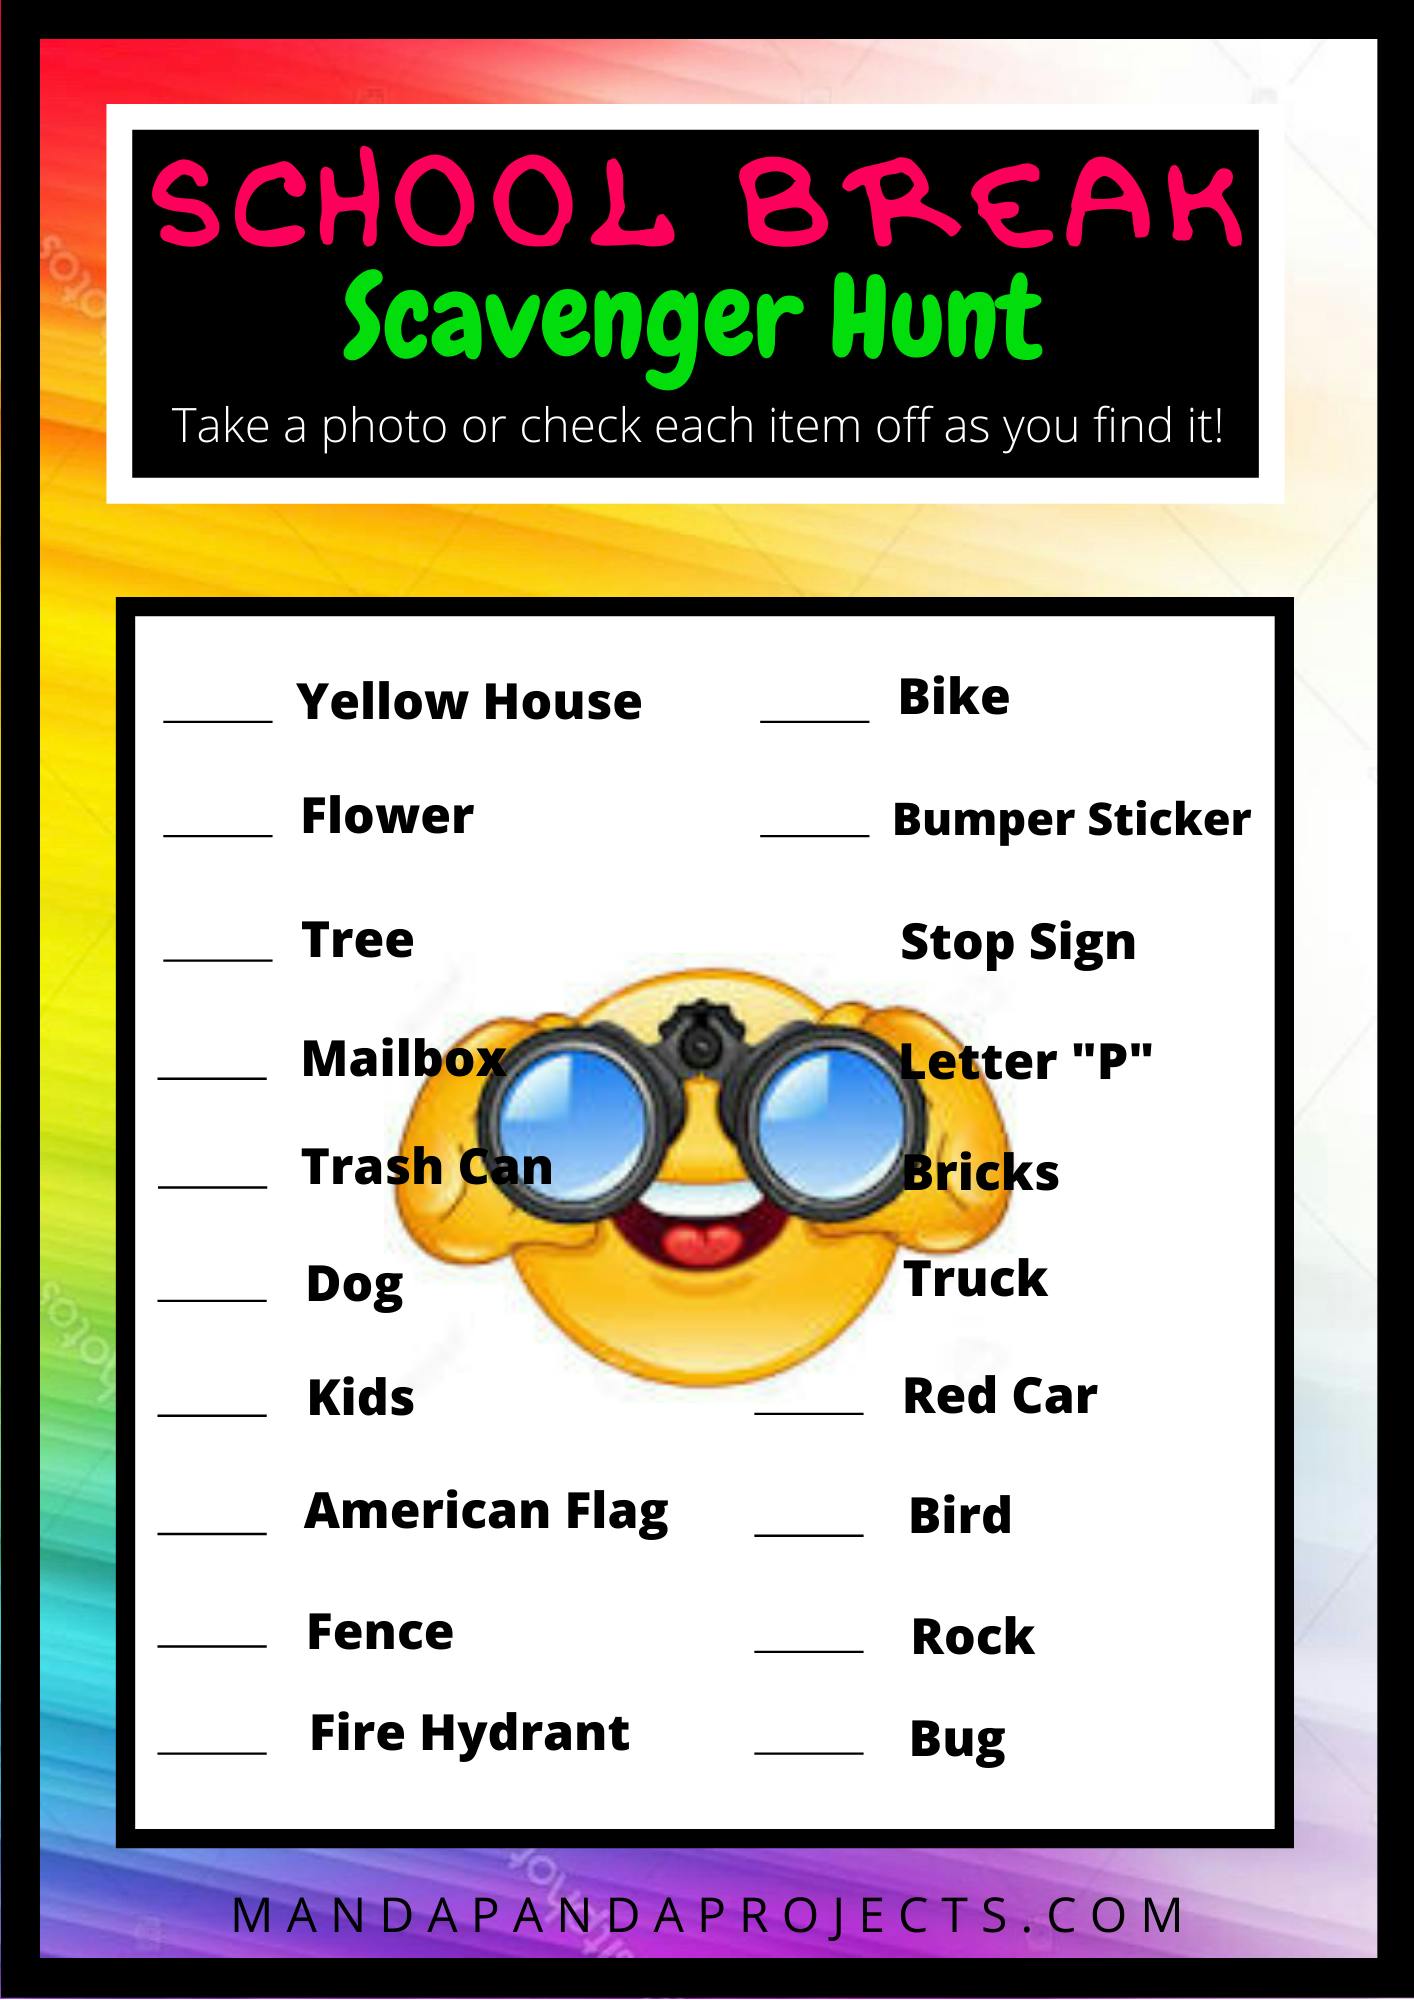 FREE Printable Scavenger Hunt Checklist